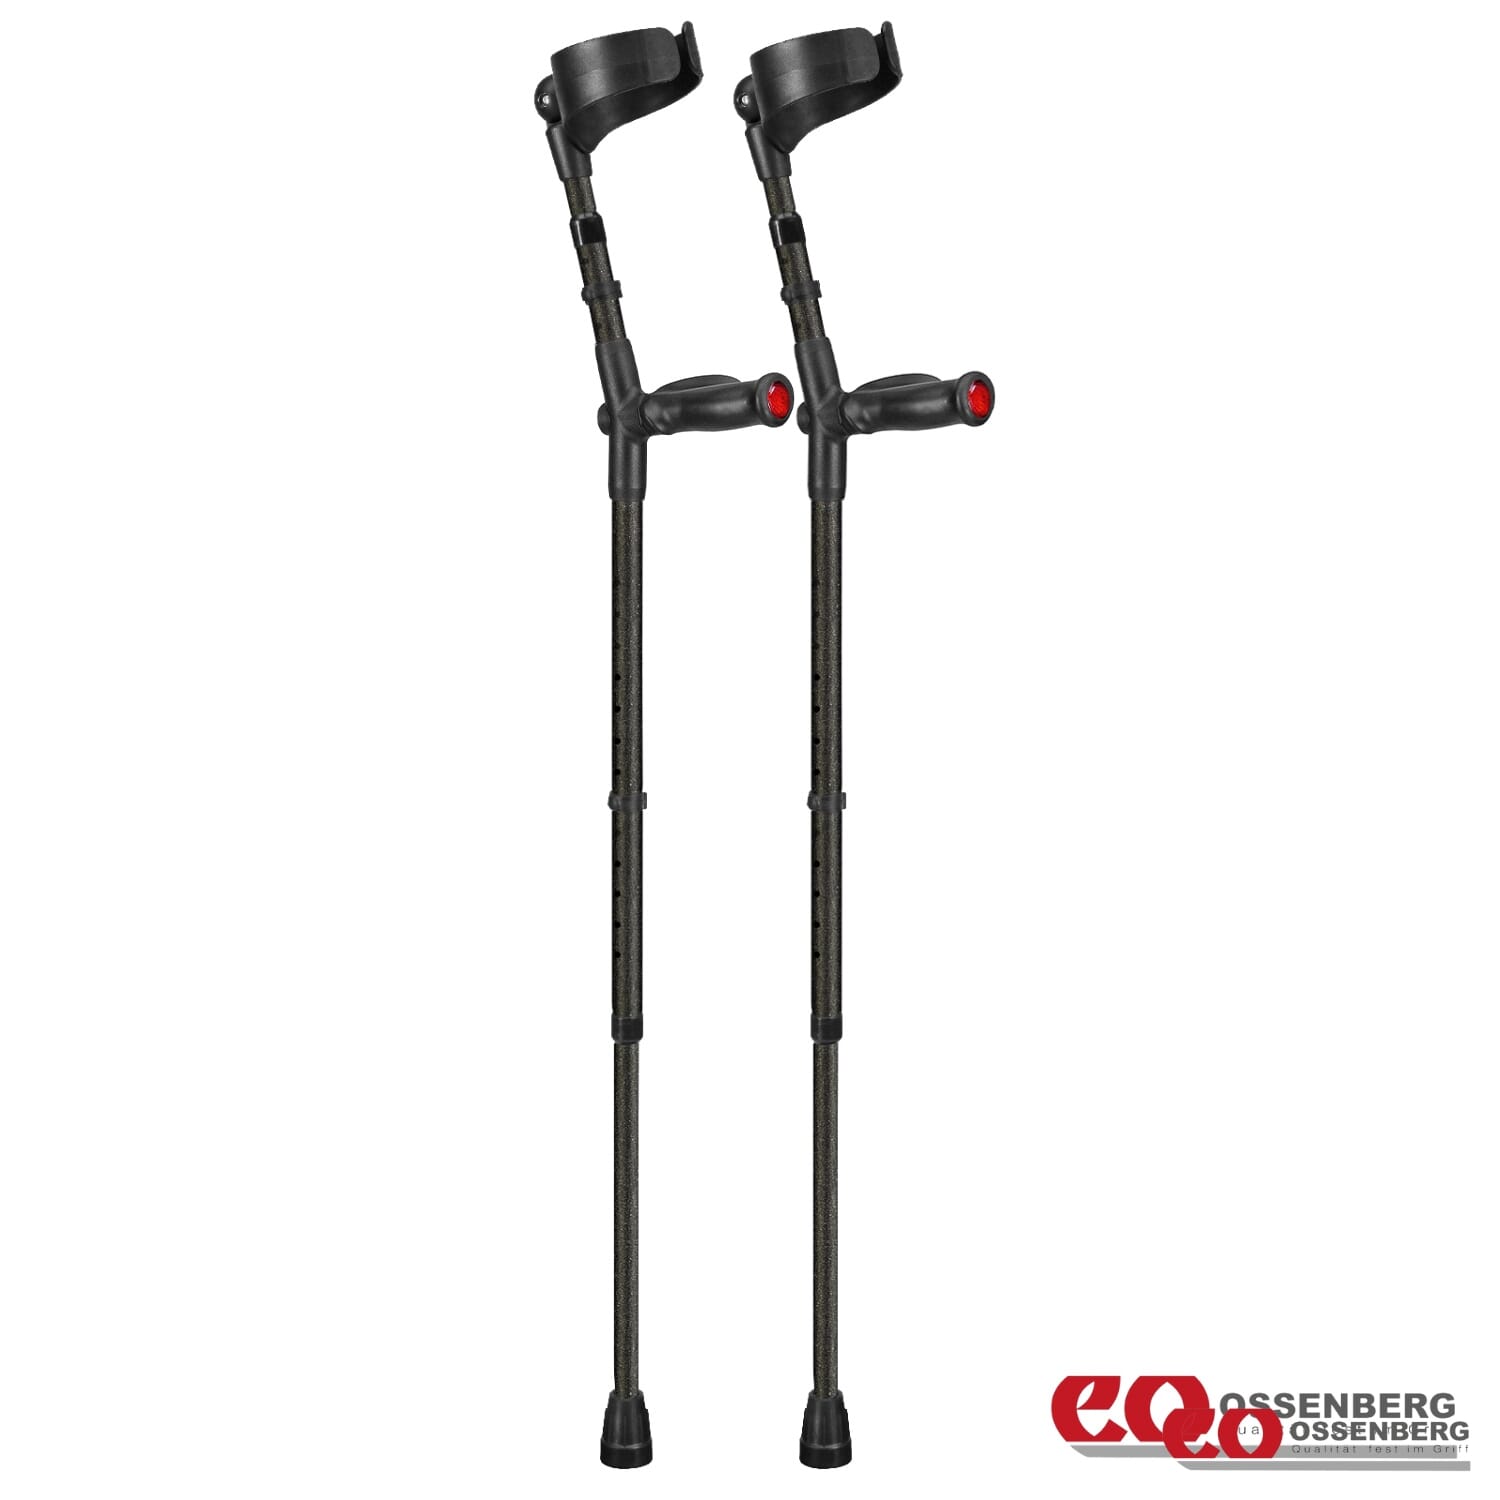 View Ossenberg Comfort Grip Double Adjustable Crutches Black Pair information